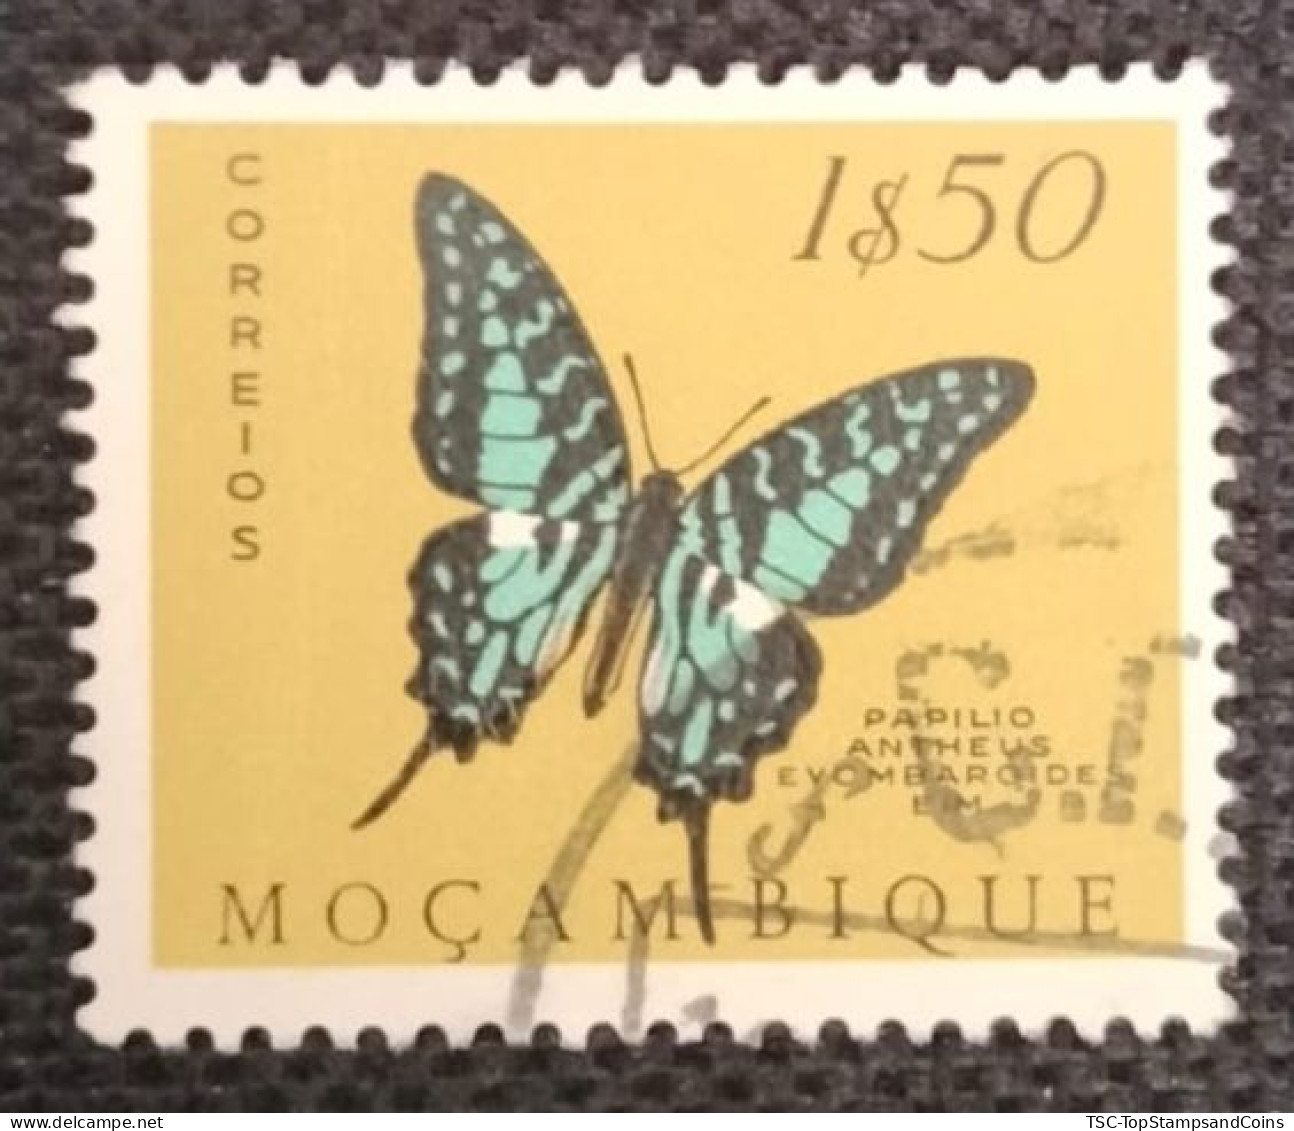 MOZPO0396U5 - Mozambique Butterflies  - 1$50 Used Stamp - Mozambique - 1953 - Mozambique